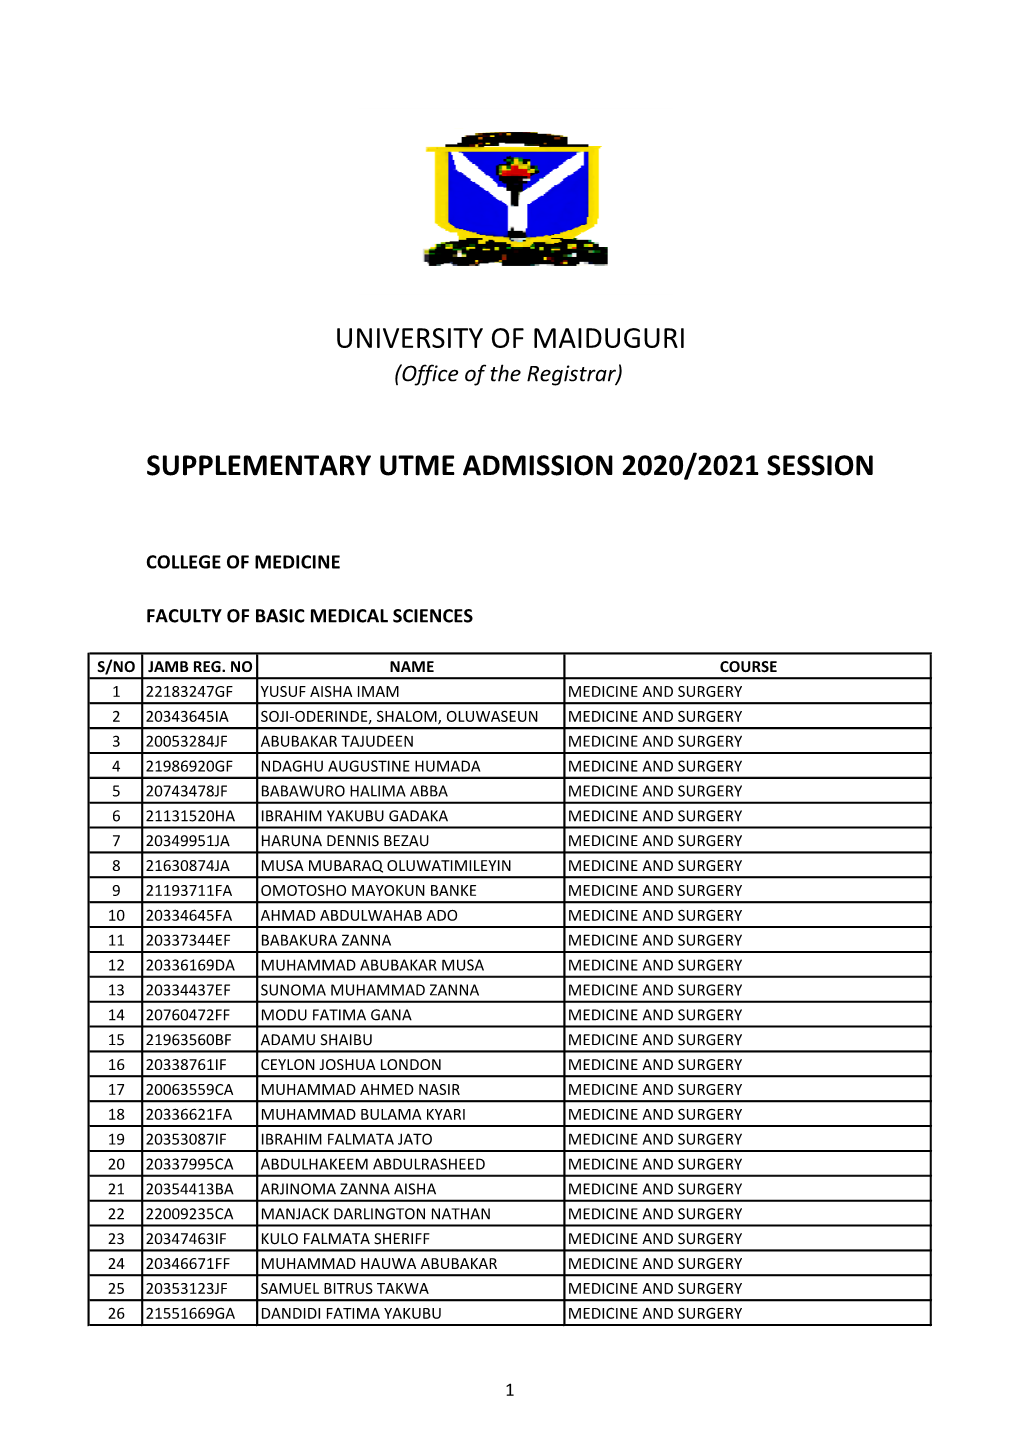 University of Maiduguri Supplementary Utme Admission 2020/2021 Session